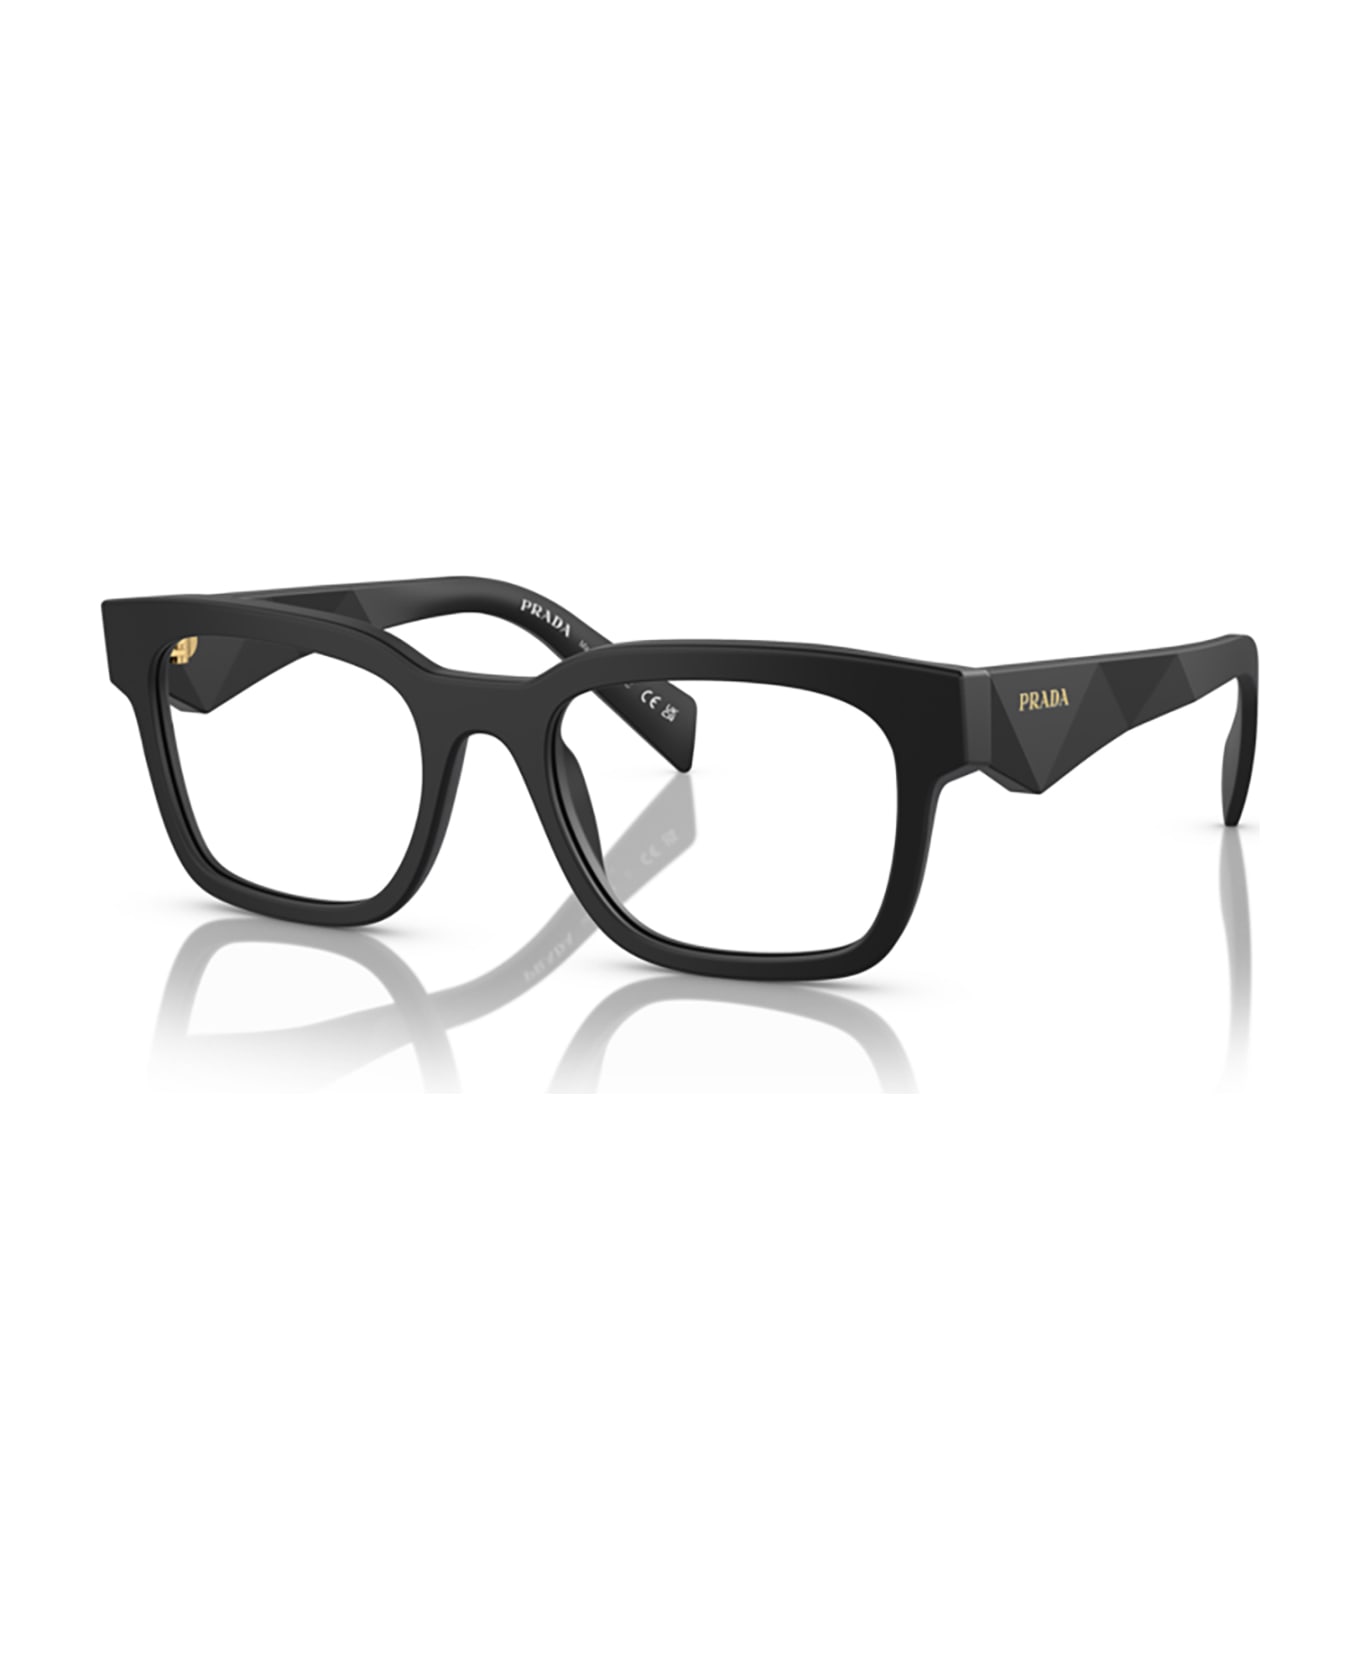 Prada Eyewear Pr A10v Matte Black Glasses - Matte Black アイウェア